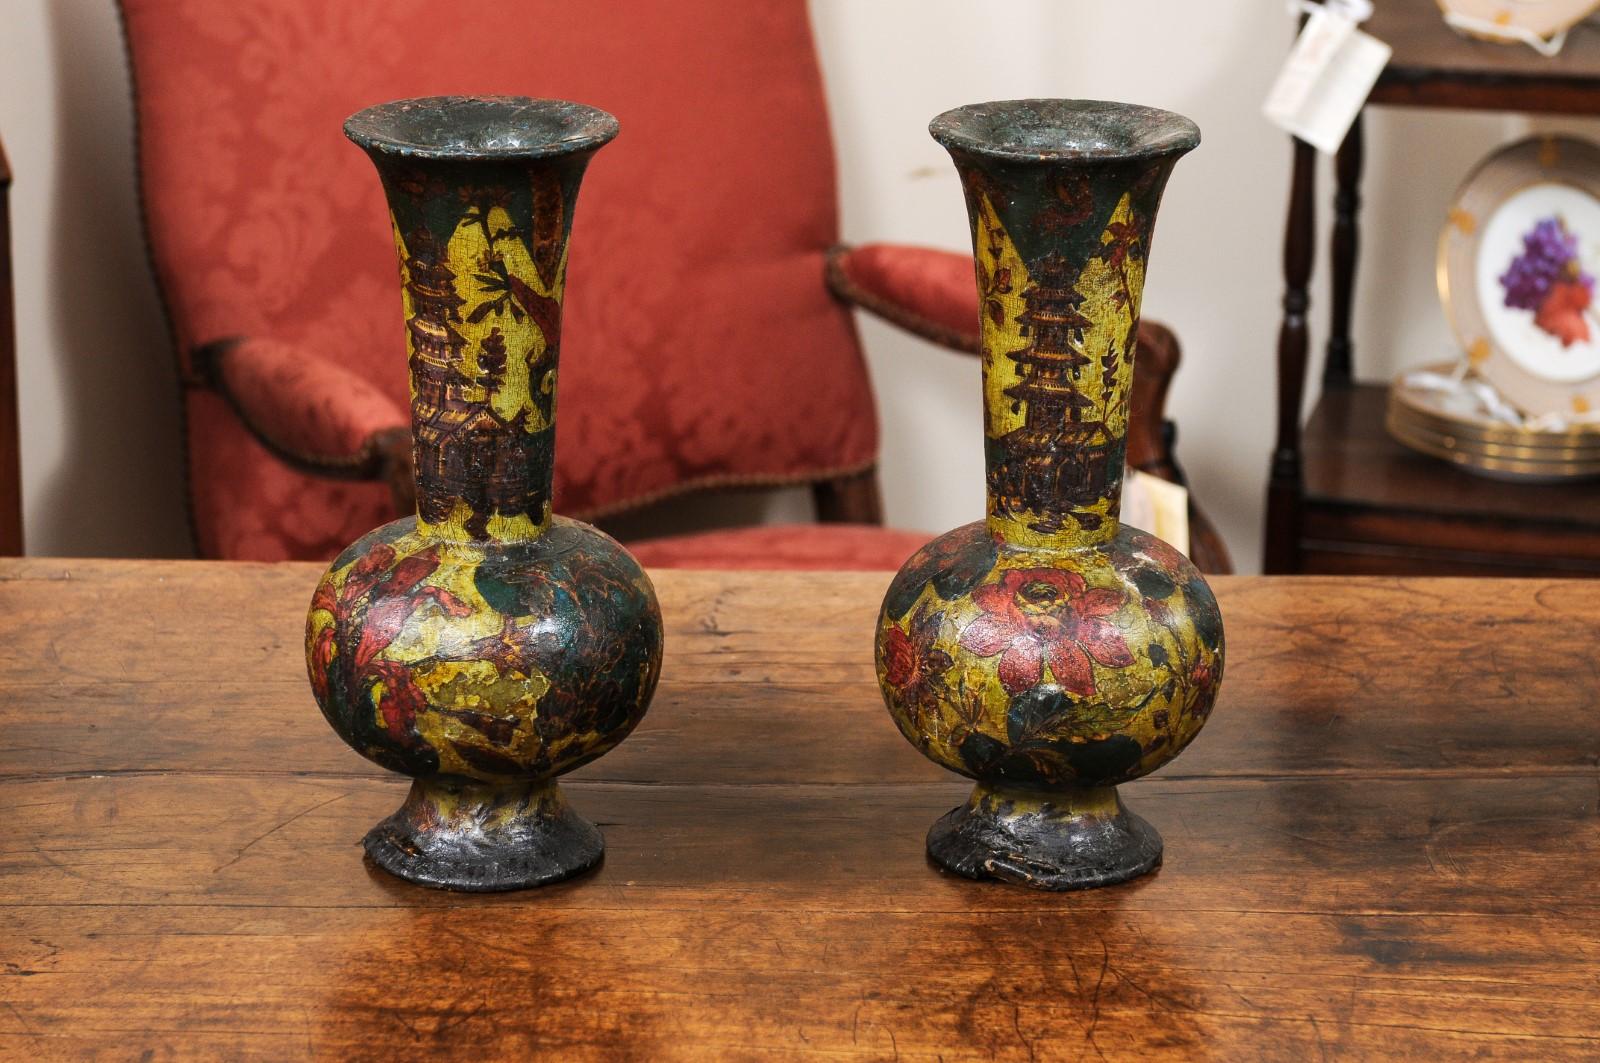  Pair of Italian Decoupage Wood Vases, 19th Century For Sale 1